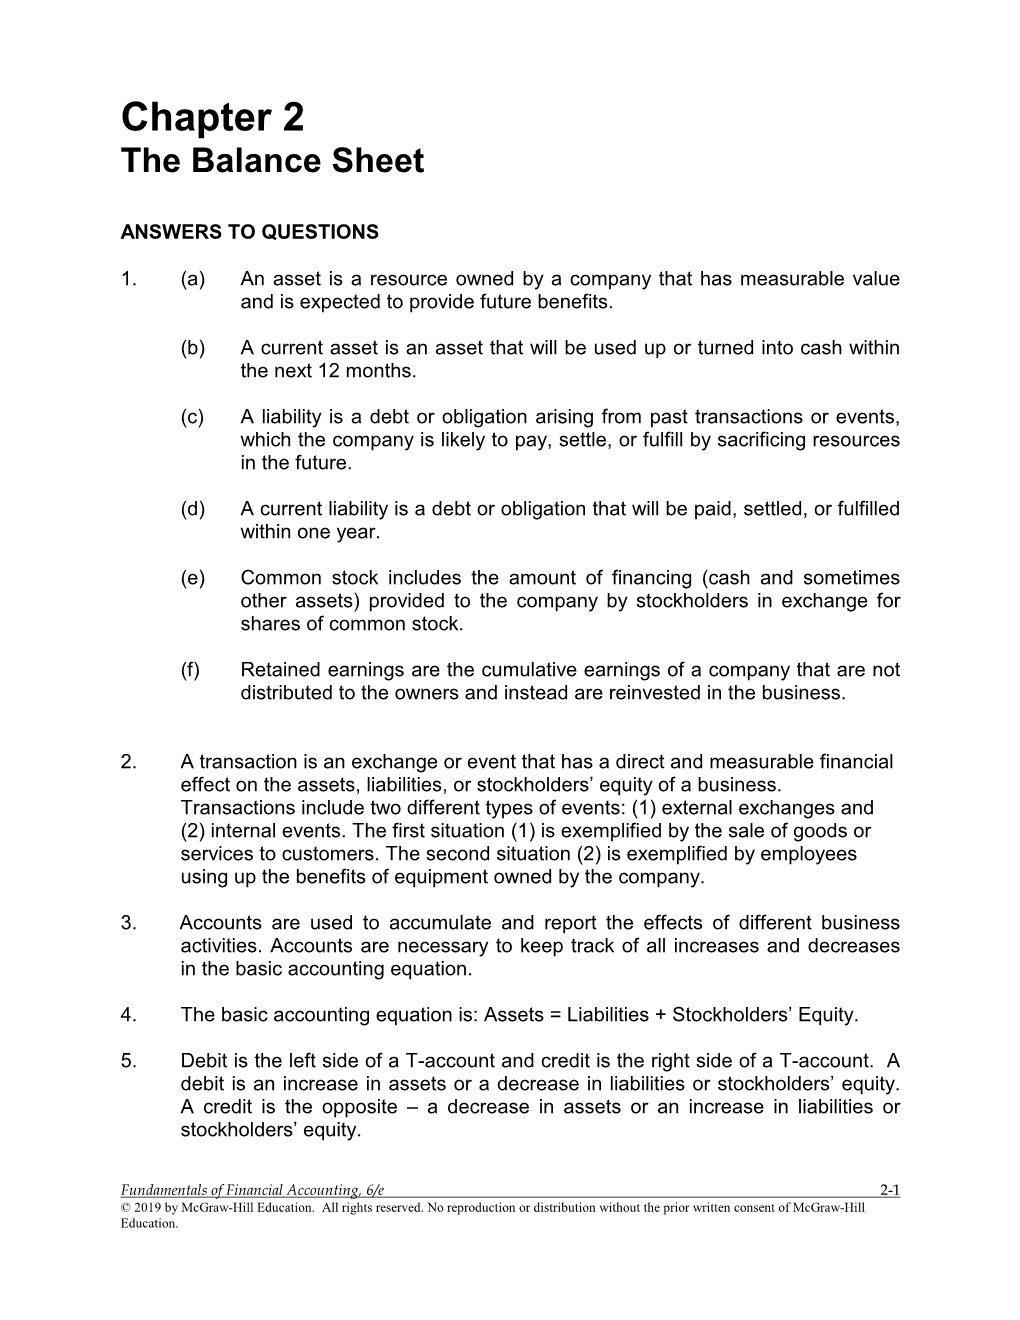 Chapter 2 the Balance Sheet